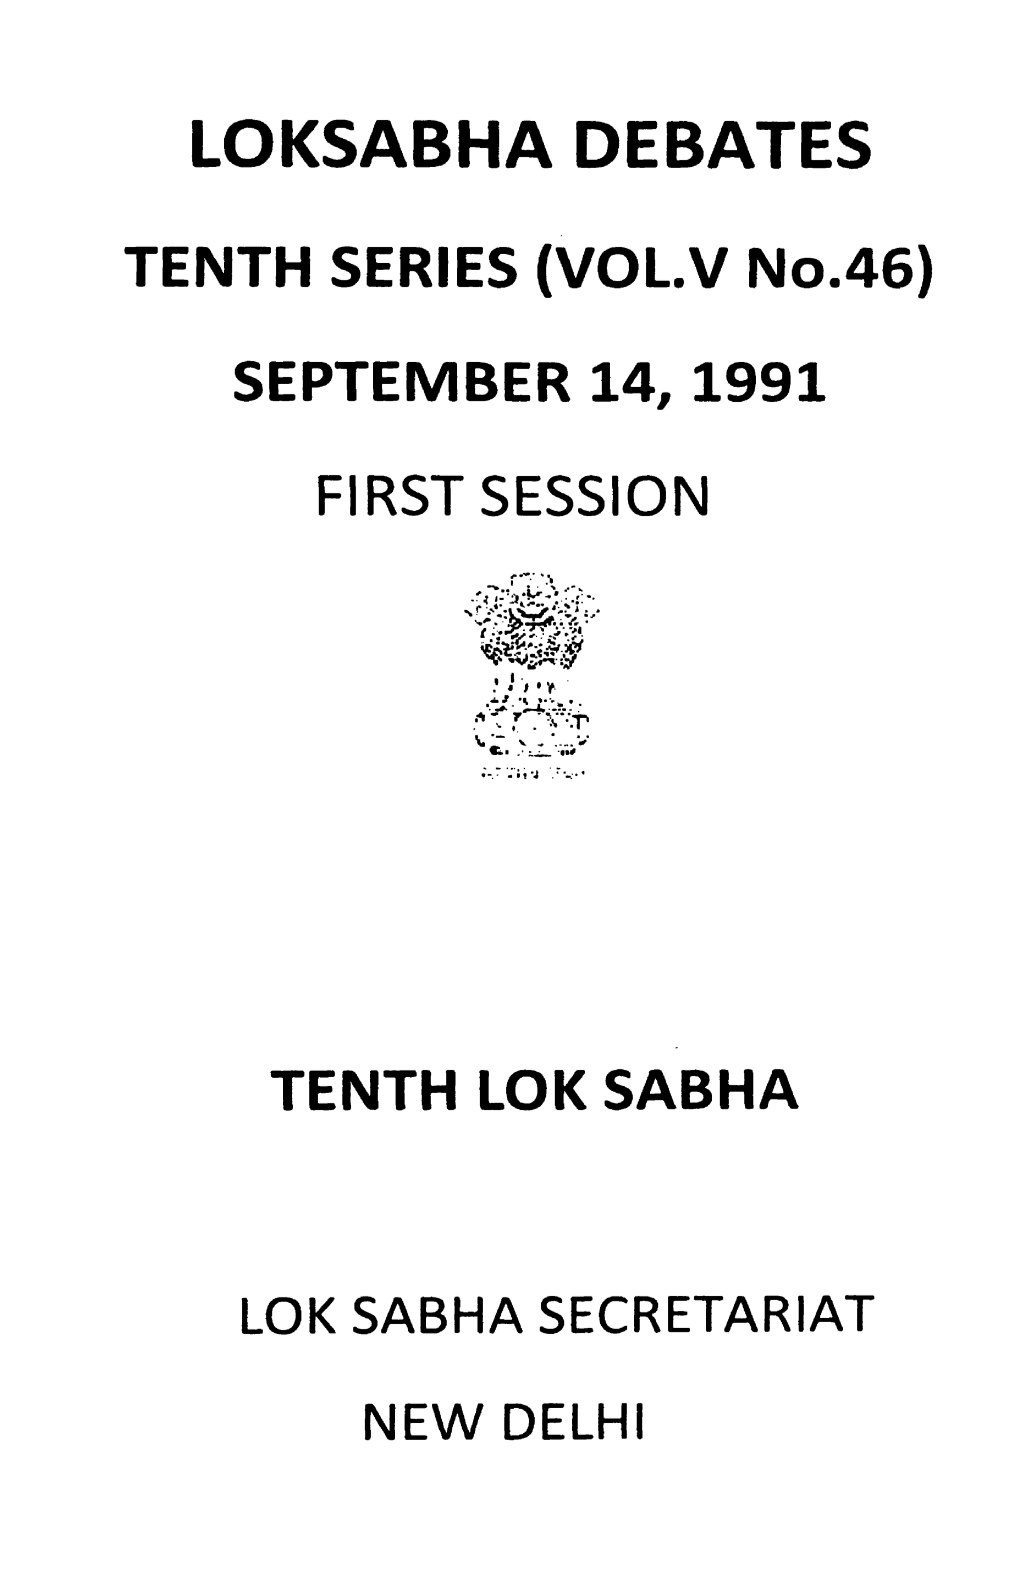 LOKSABHA DEBATES TENTH SERIES (VOLV No.46) SEPTEMBER 14, 1991 FIRST SESSION